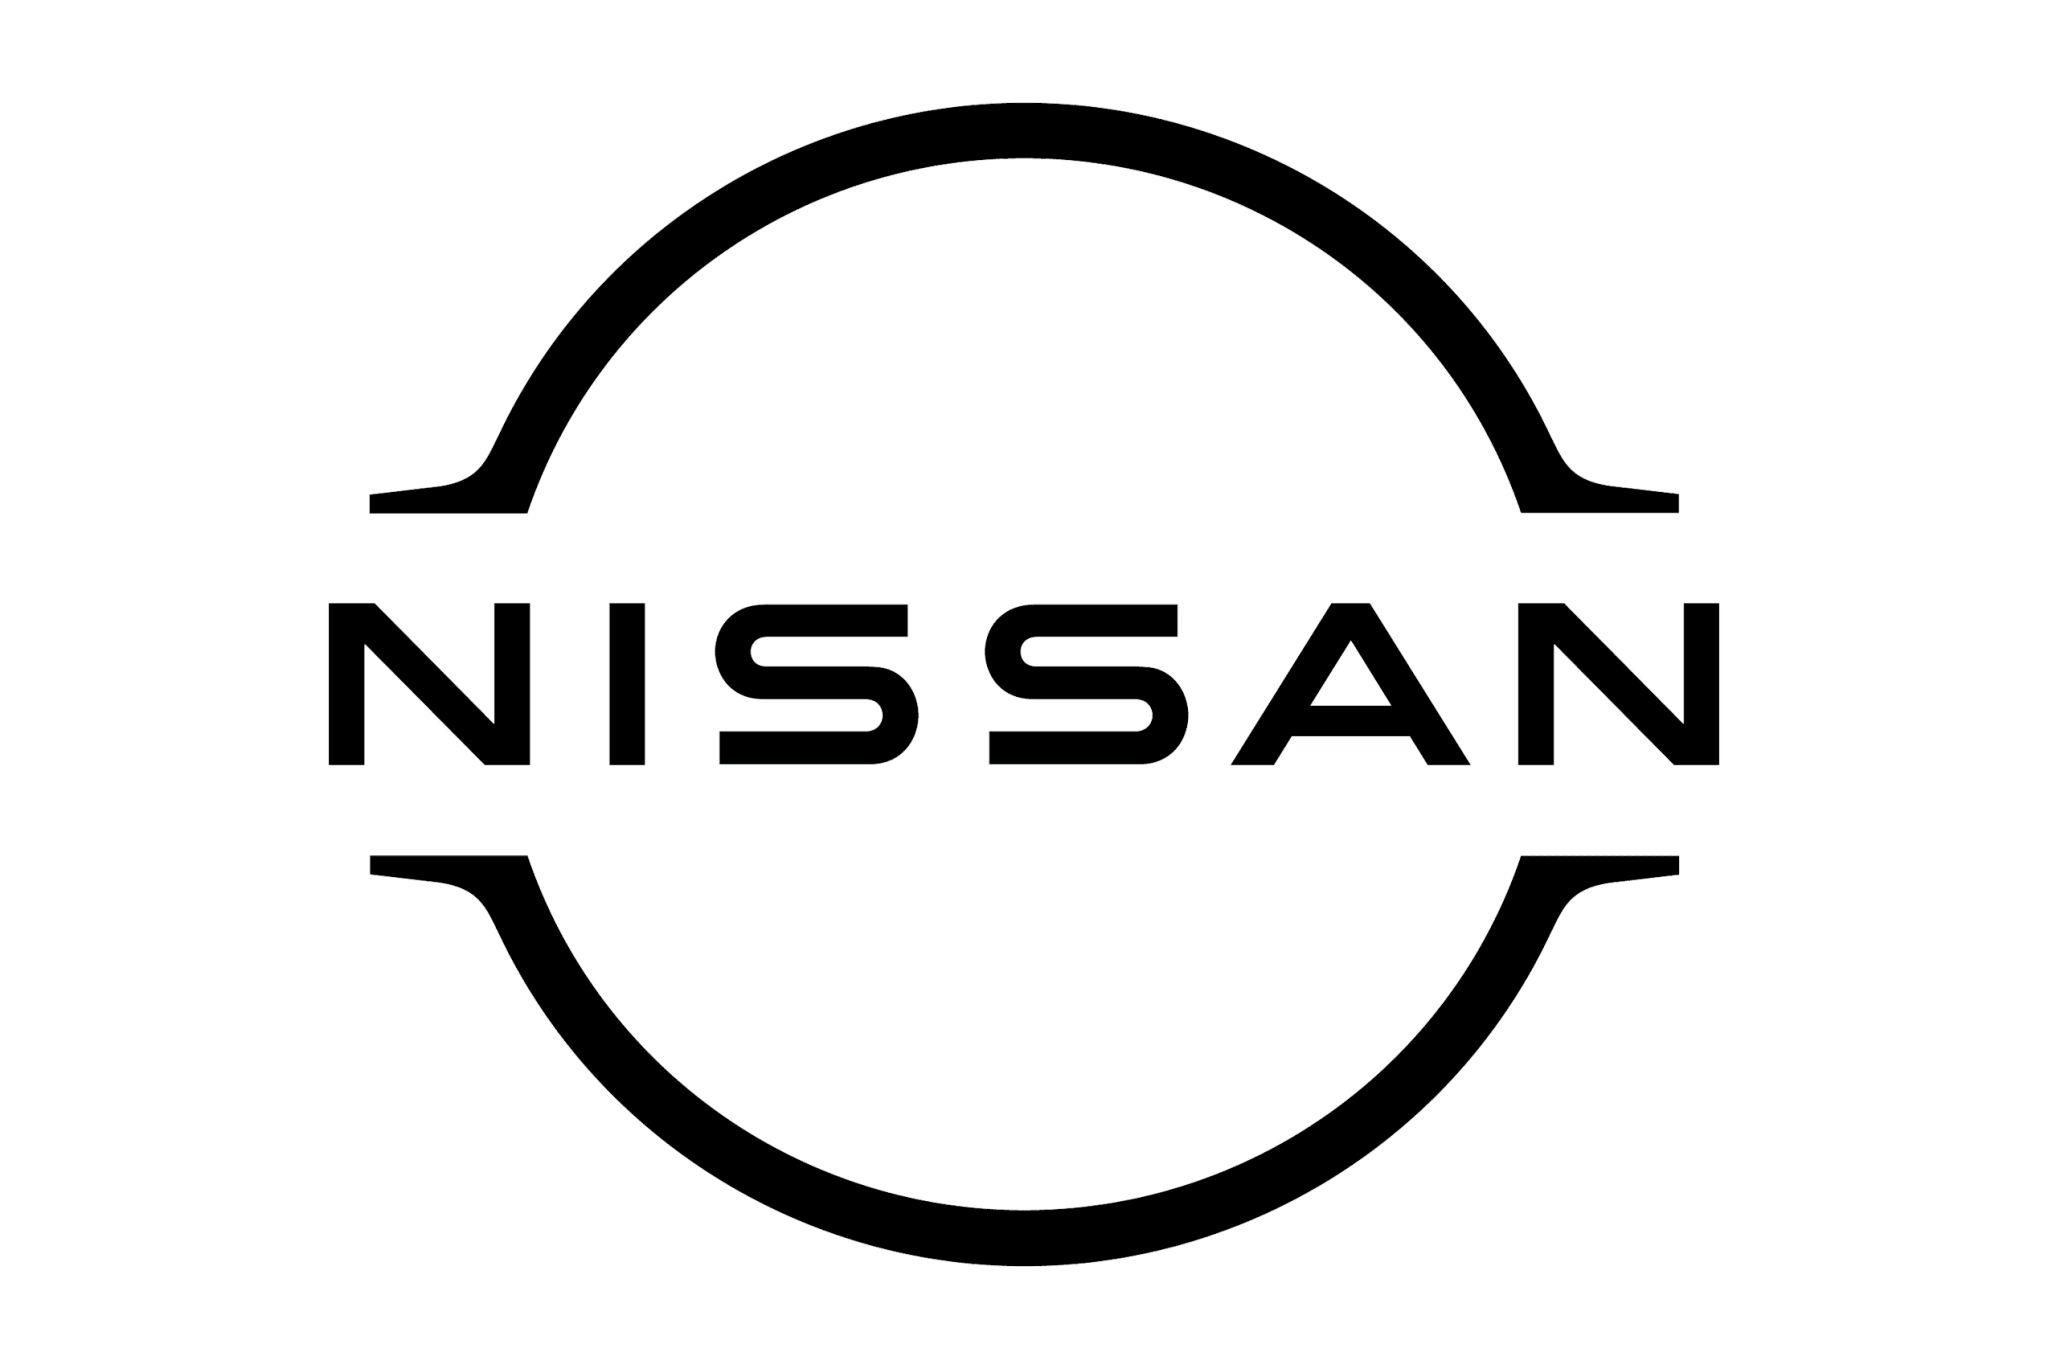 Nissan Logo PNG Image HD